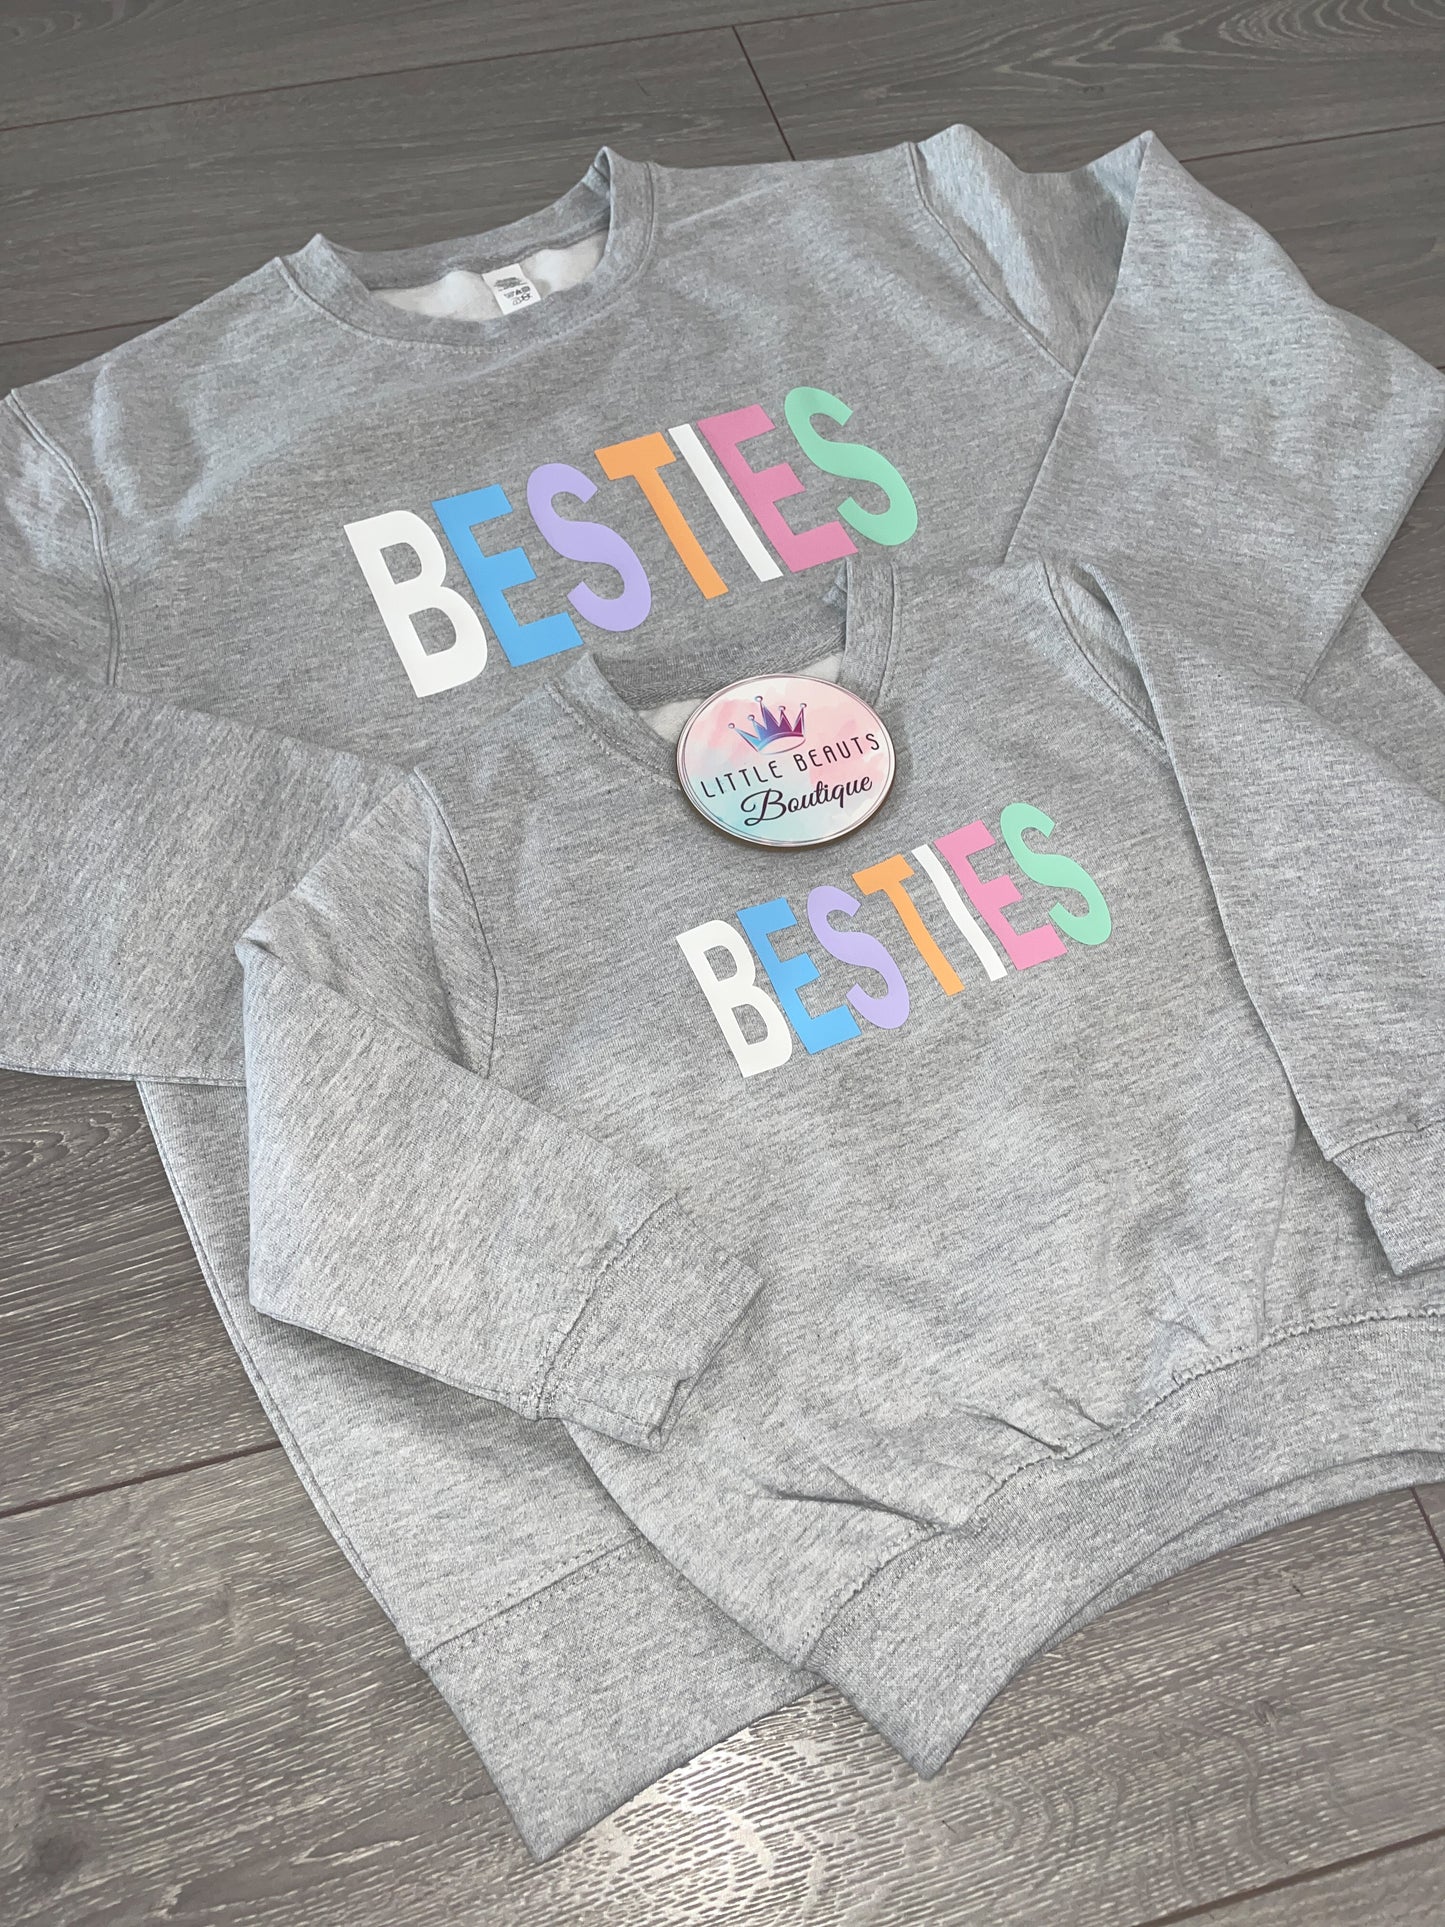 Matching Besties Sweaters Set - Adults & Children's